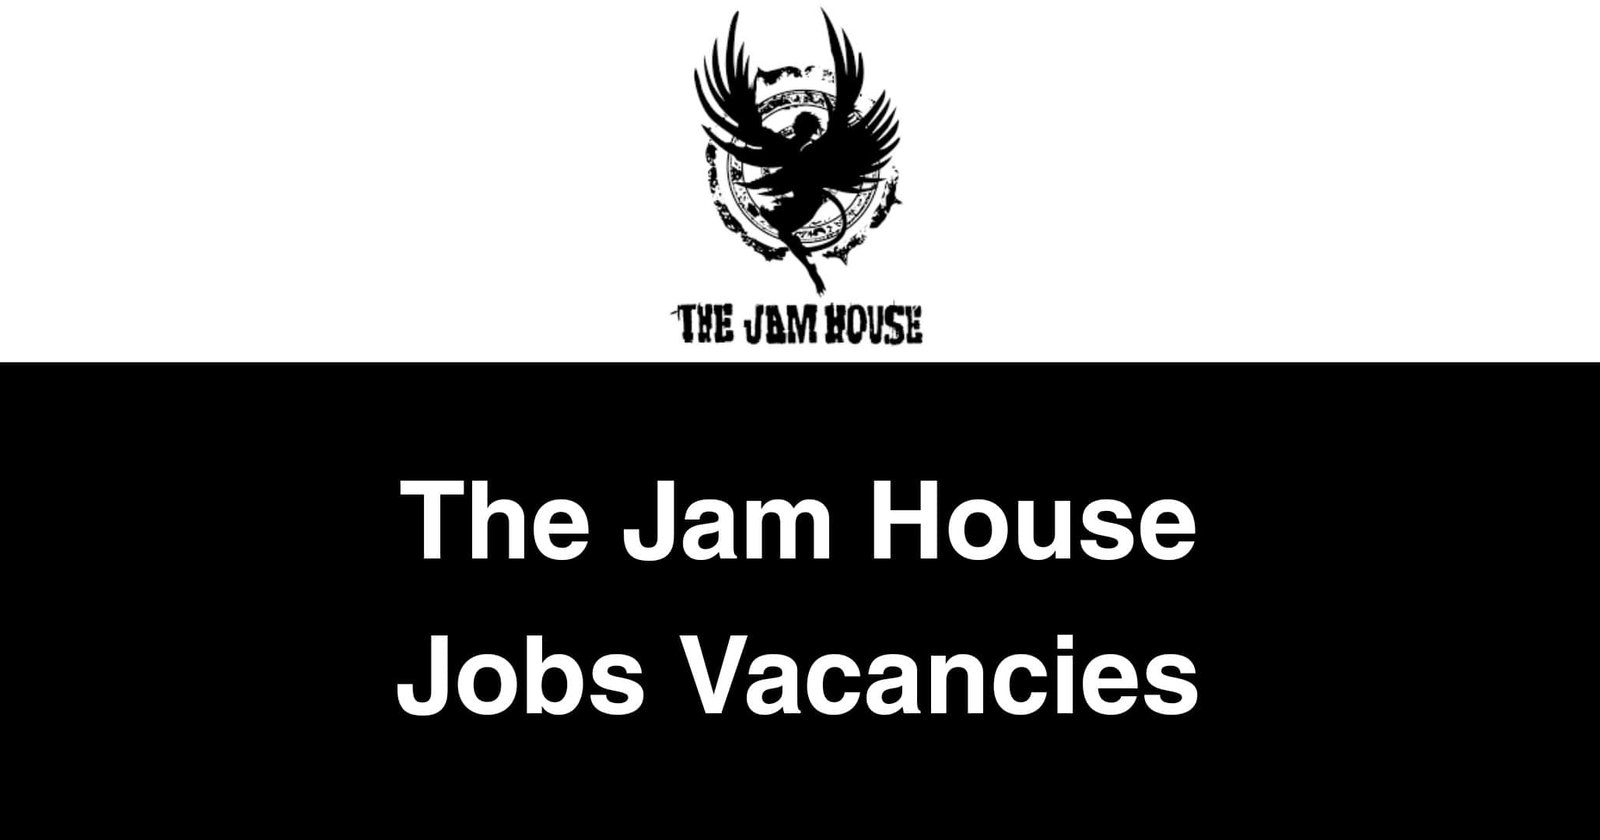 The Jam House Jobs Vacancies